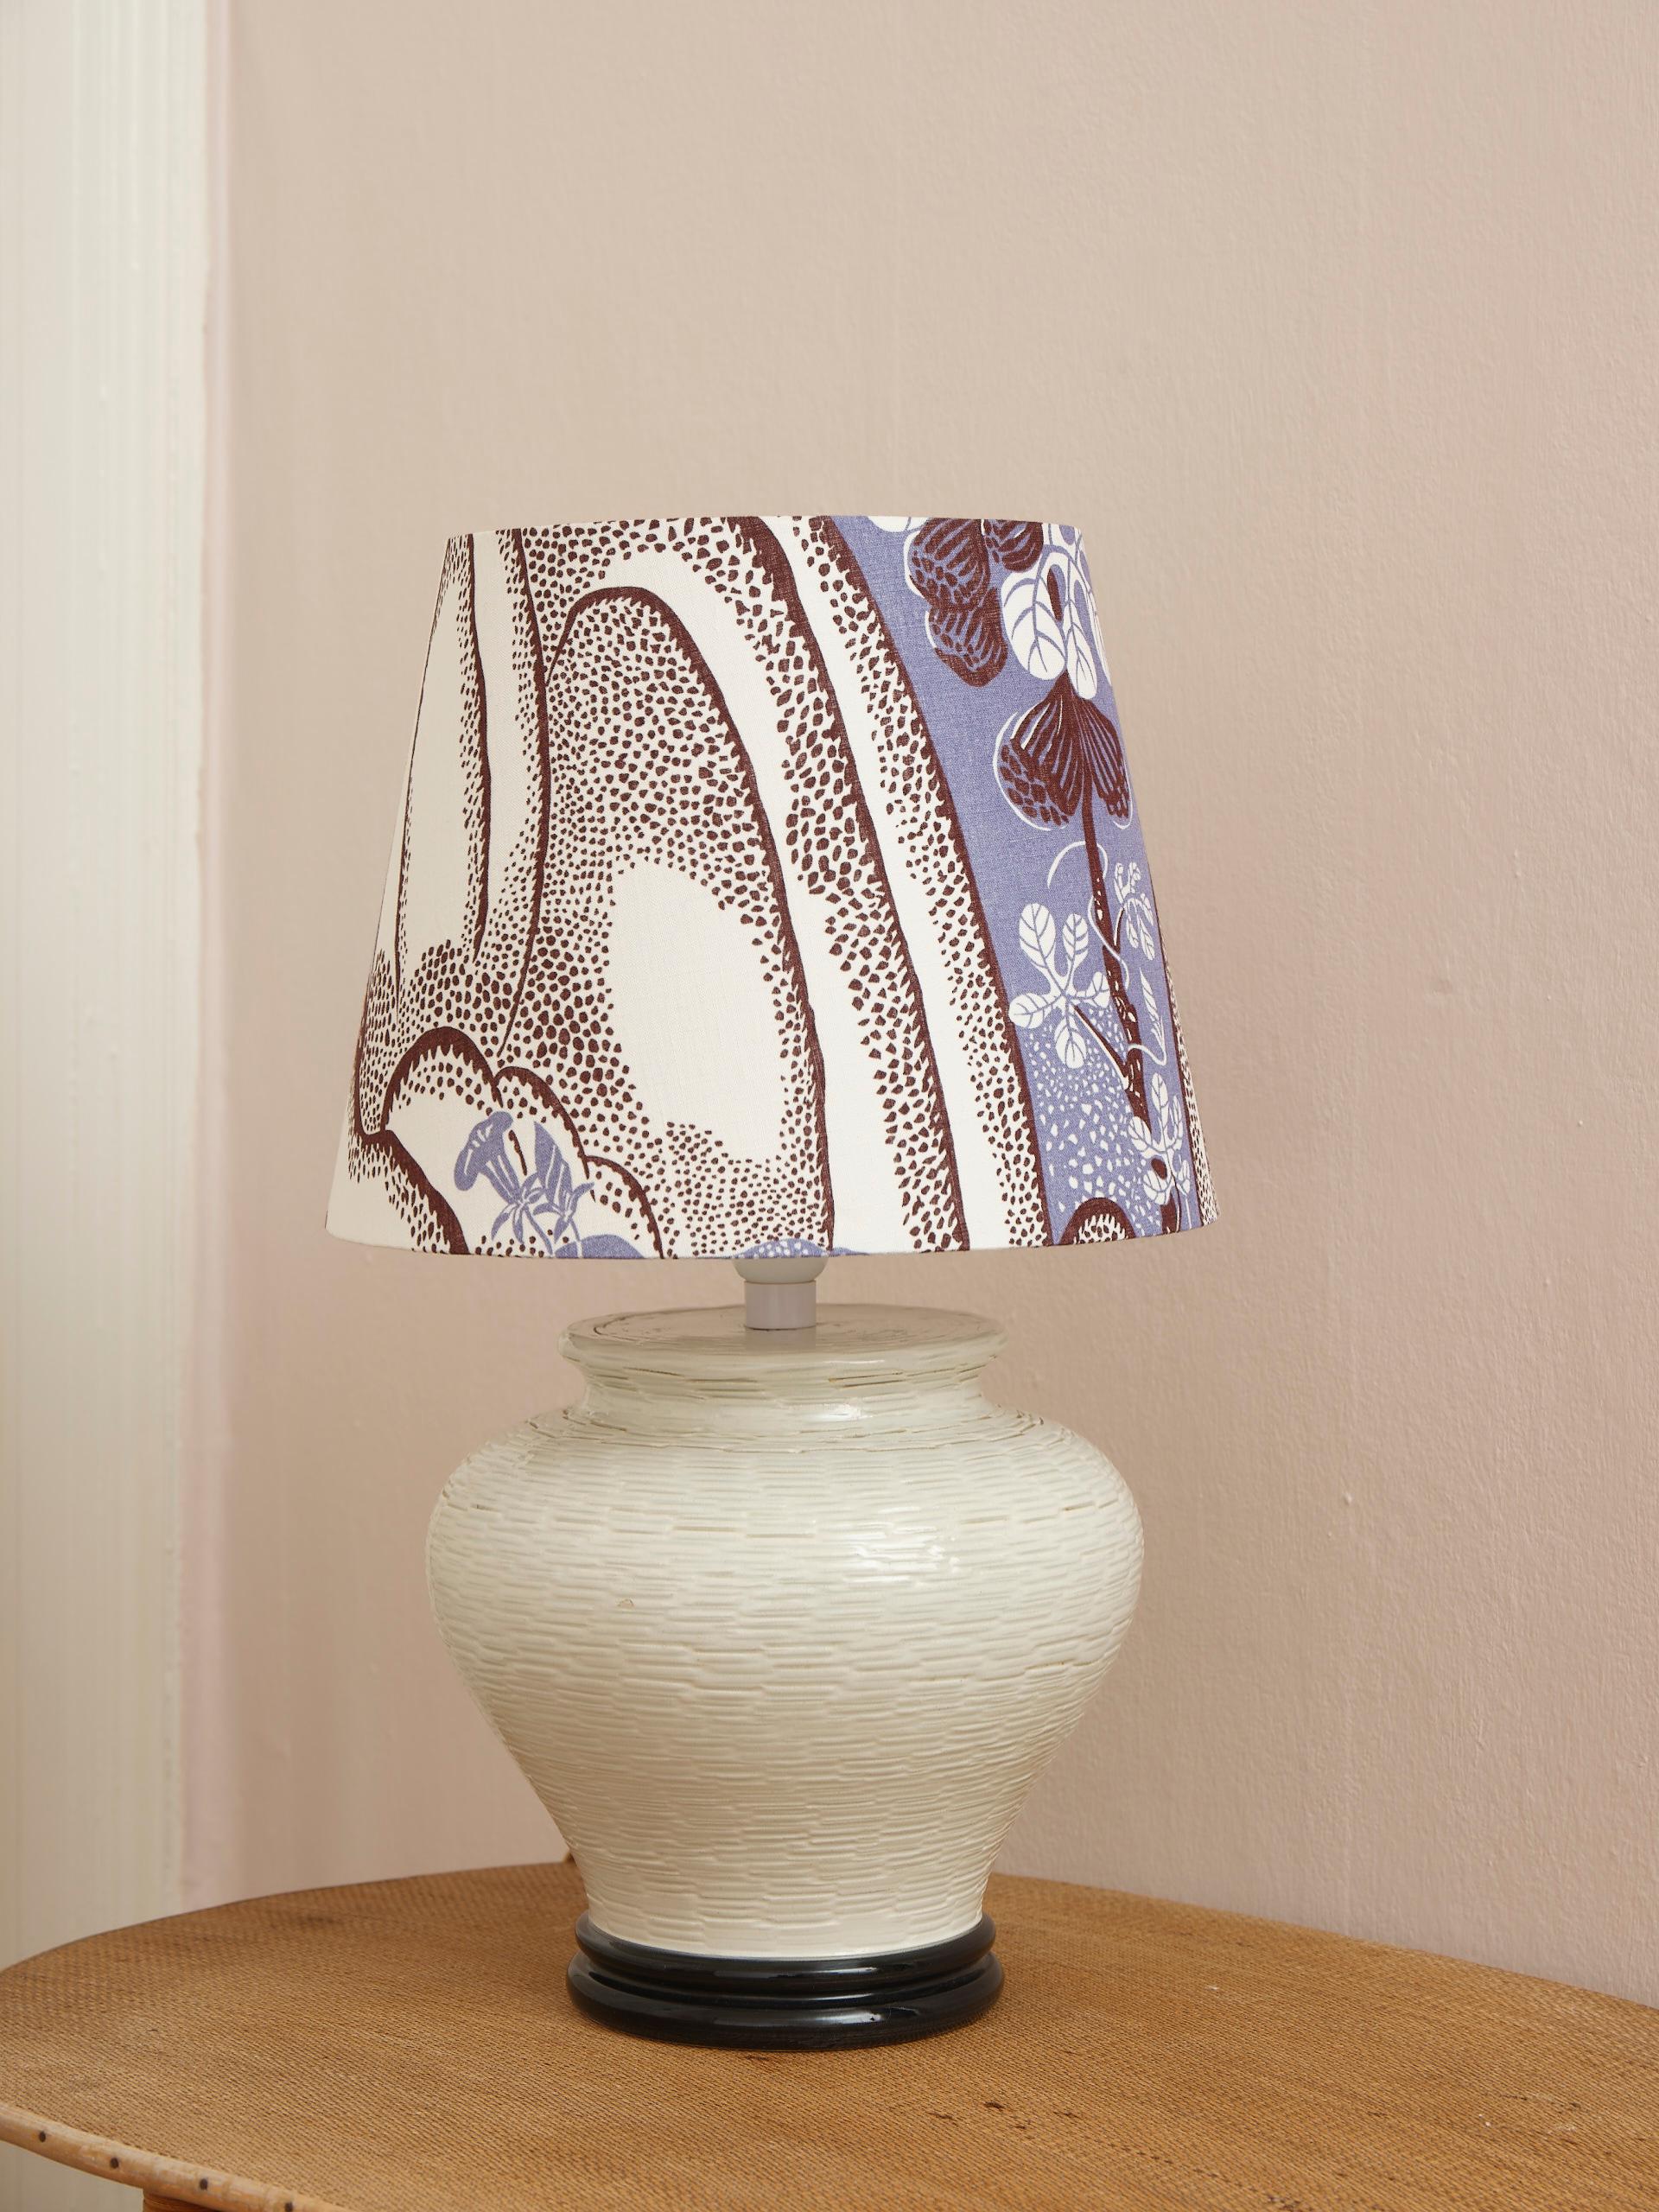 Vintage handmade Italian ceramic table lamp shade in vintage Josef Frank textile For Sale 7